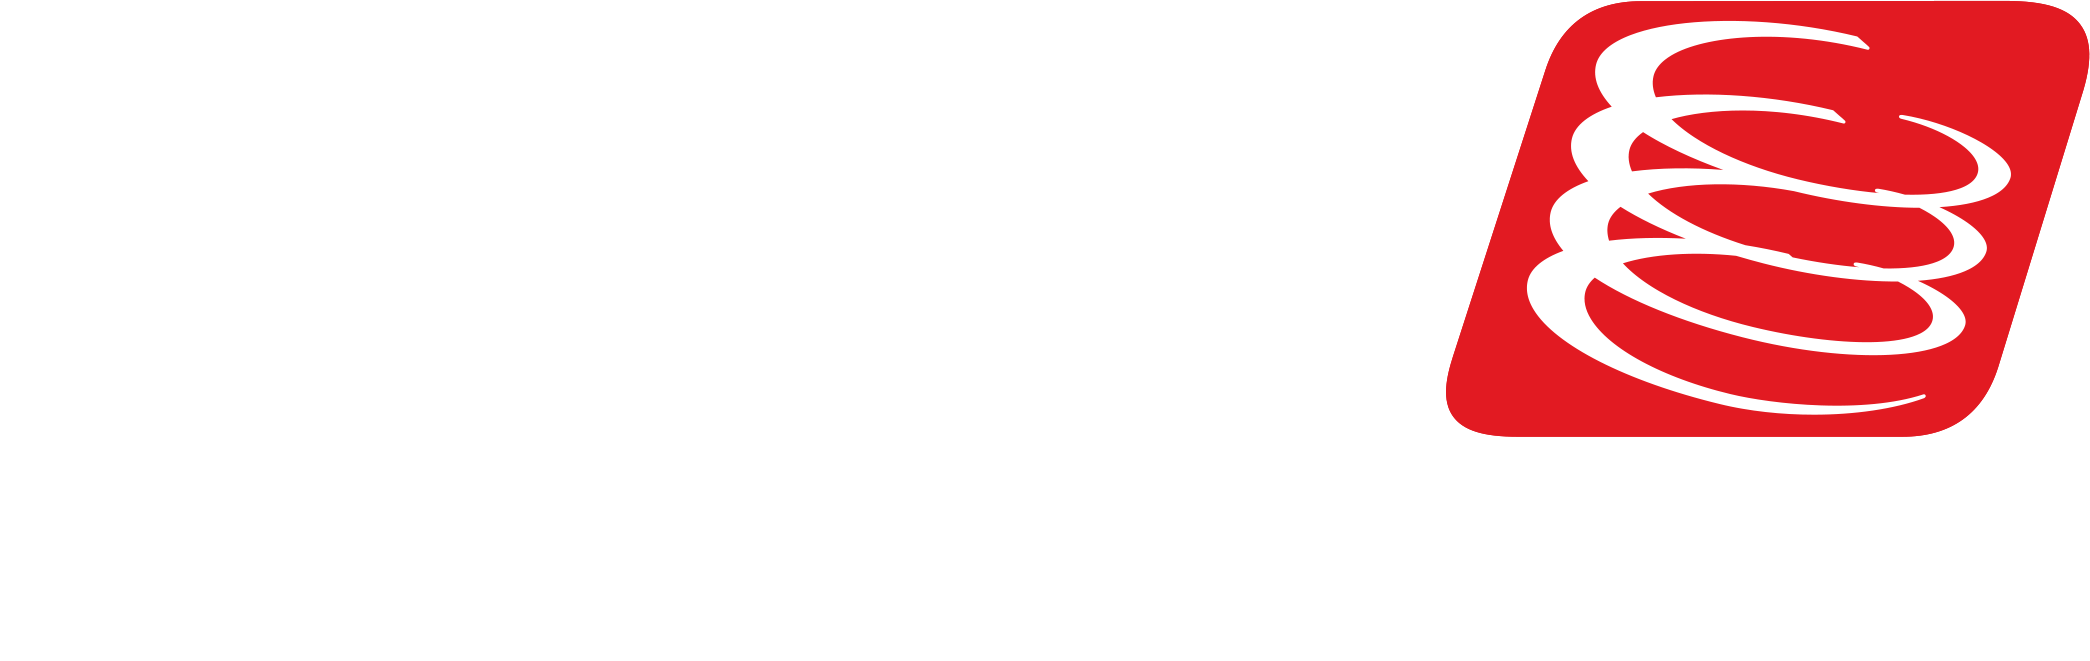 Logo Experience the Edge